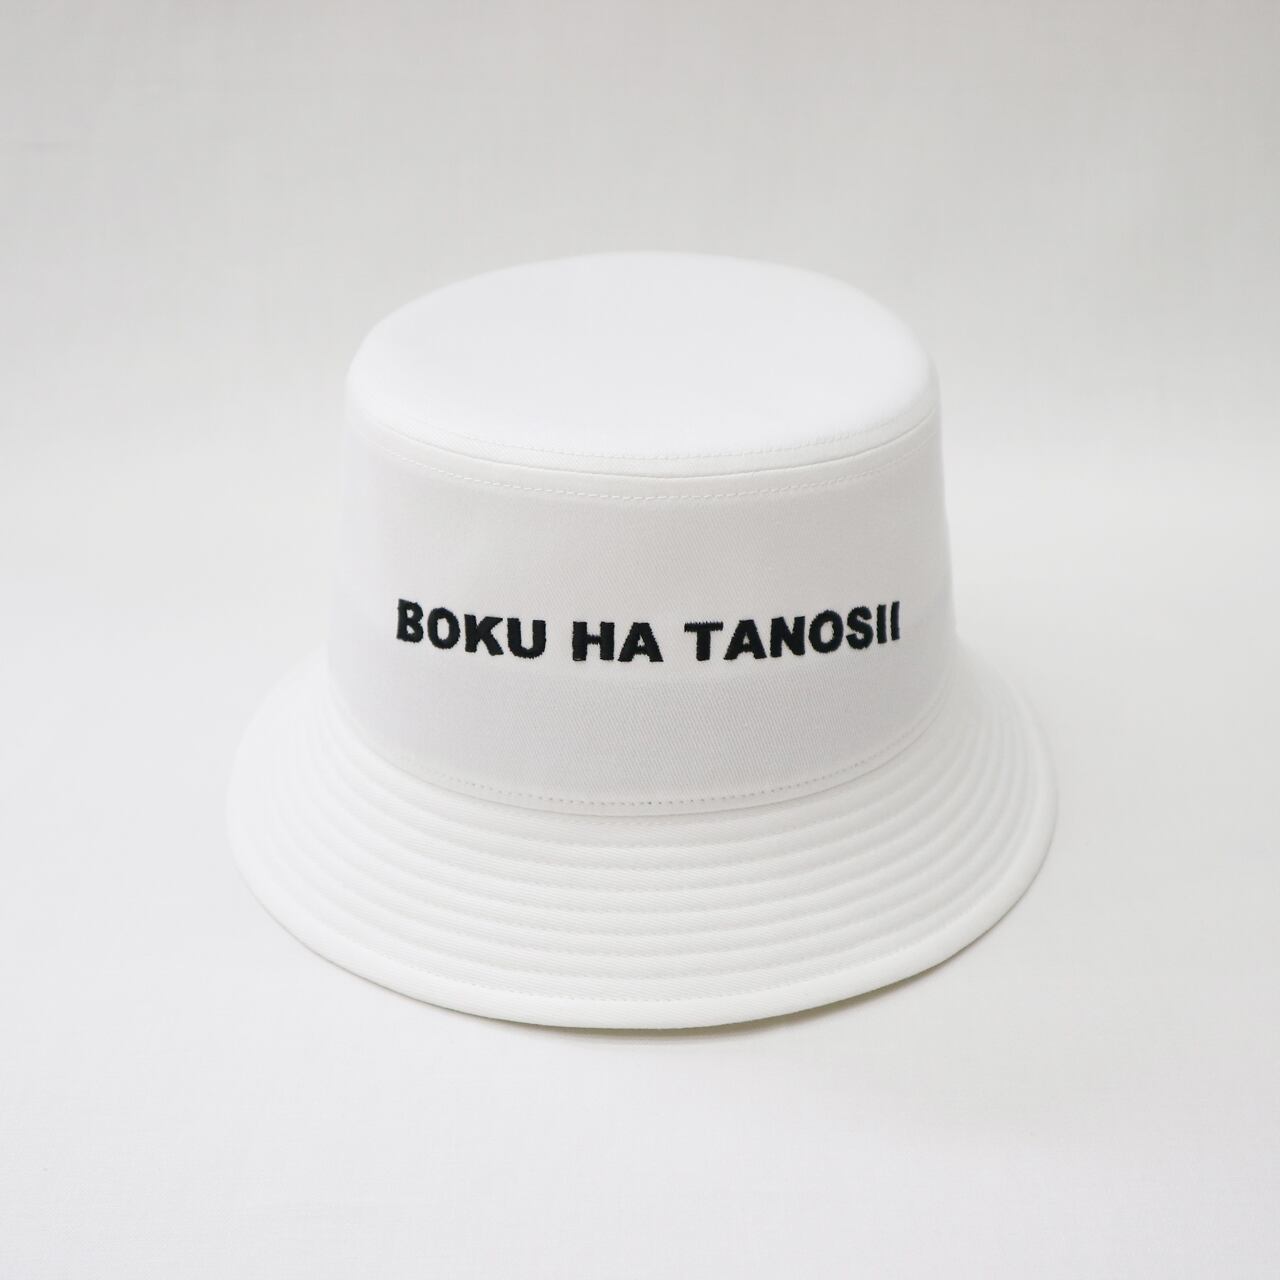 BOKU HA TANOSII ／ ボクタノHAT "White"